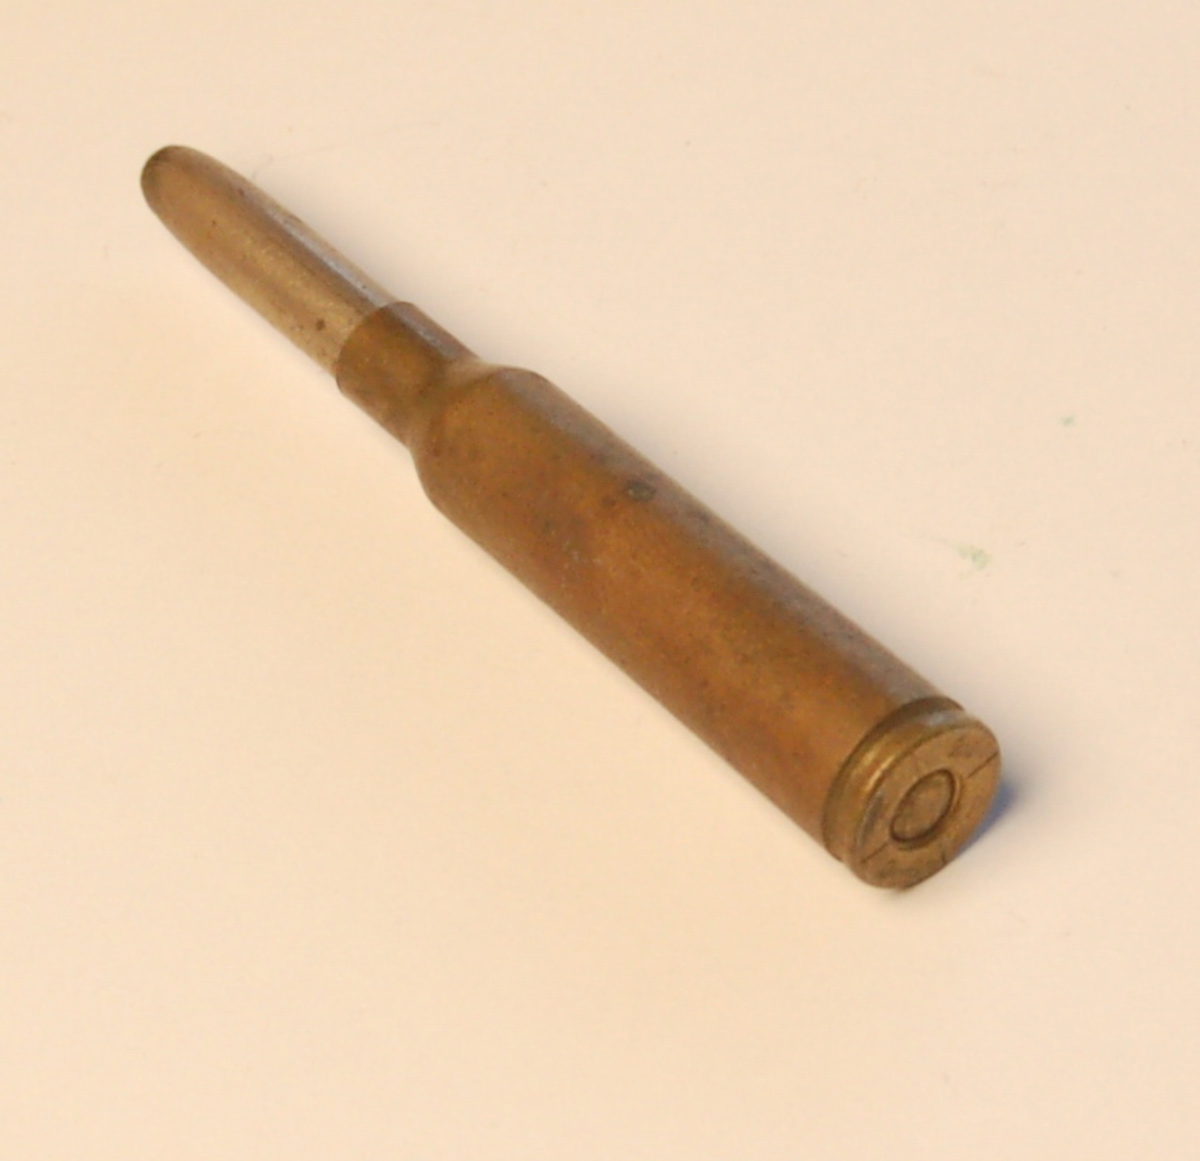 Fulladet flaskeformet geværpatron i 6,5 mm. med blyspiss.